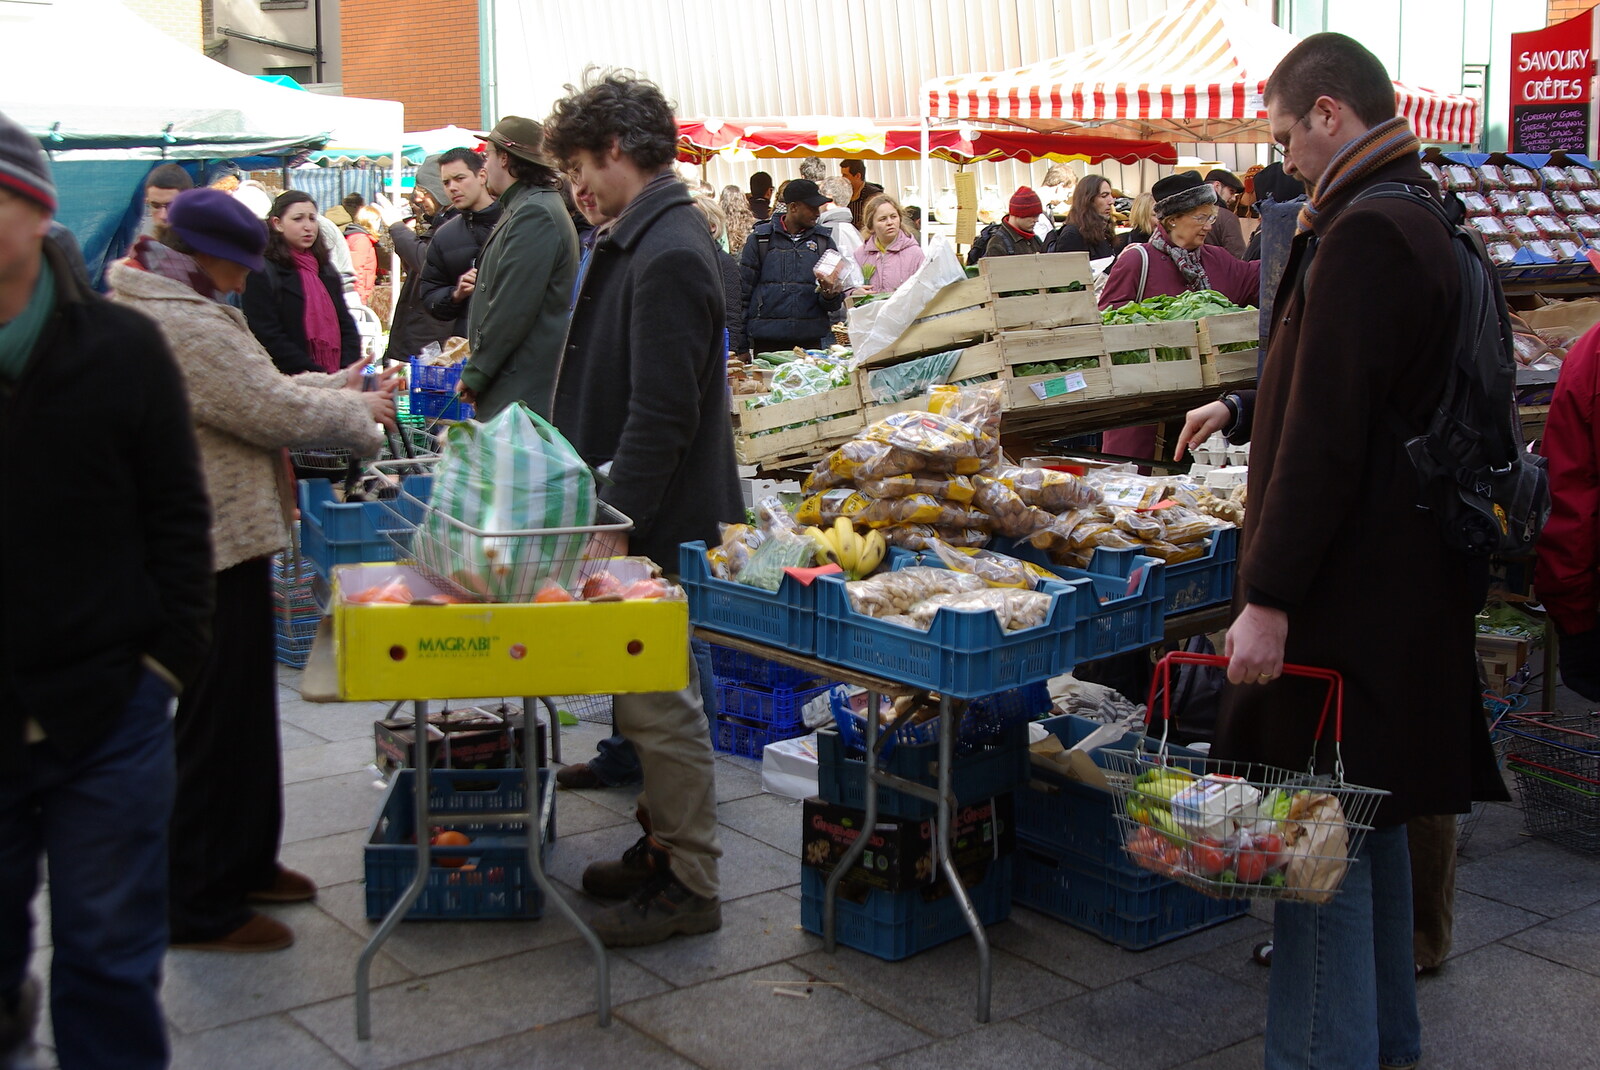 Easter in Dublin, Ireland - 21st March 2008: Outdoor market